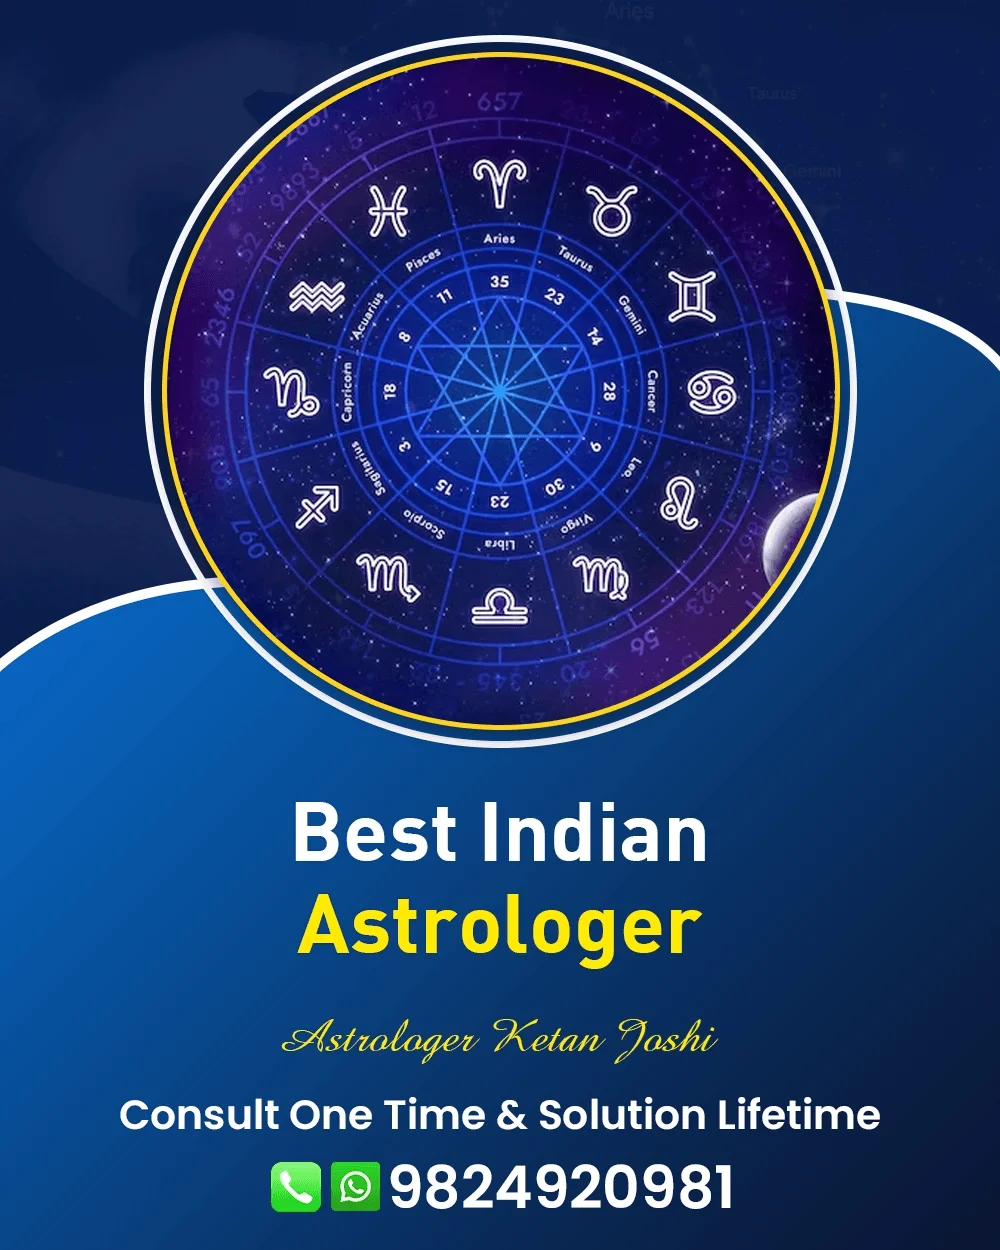 Best Astrologer In Kolhapur